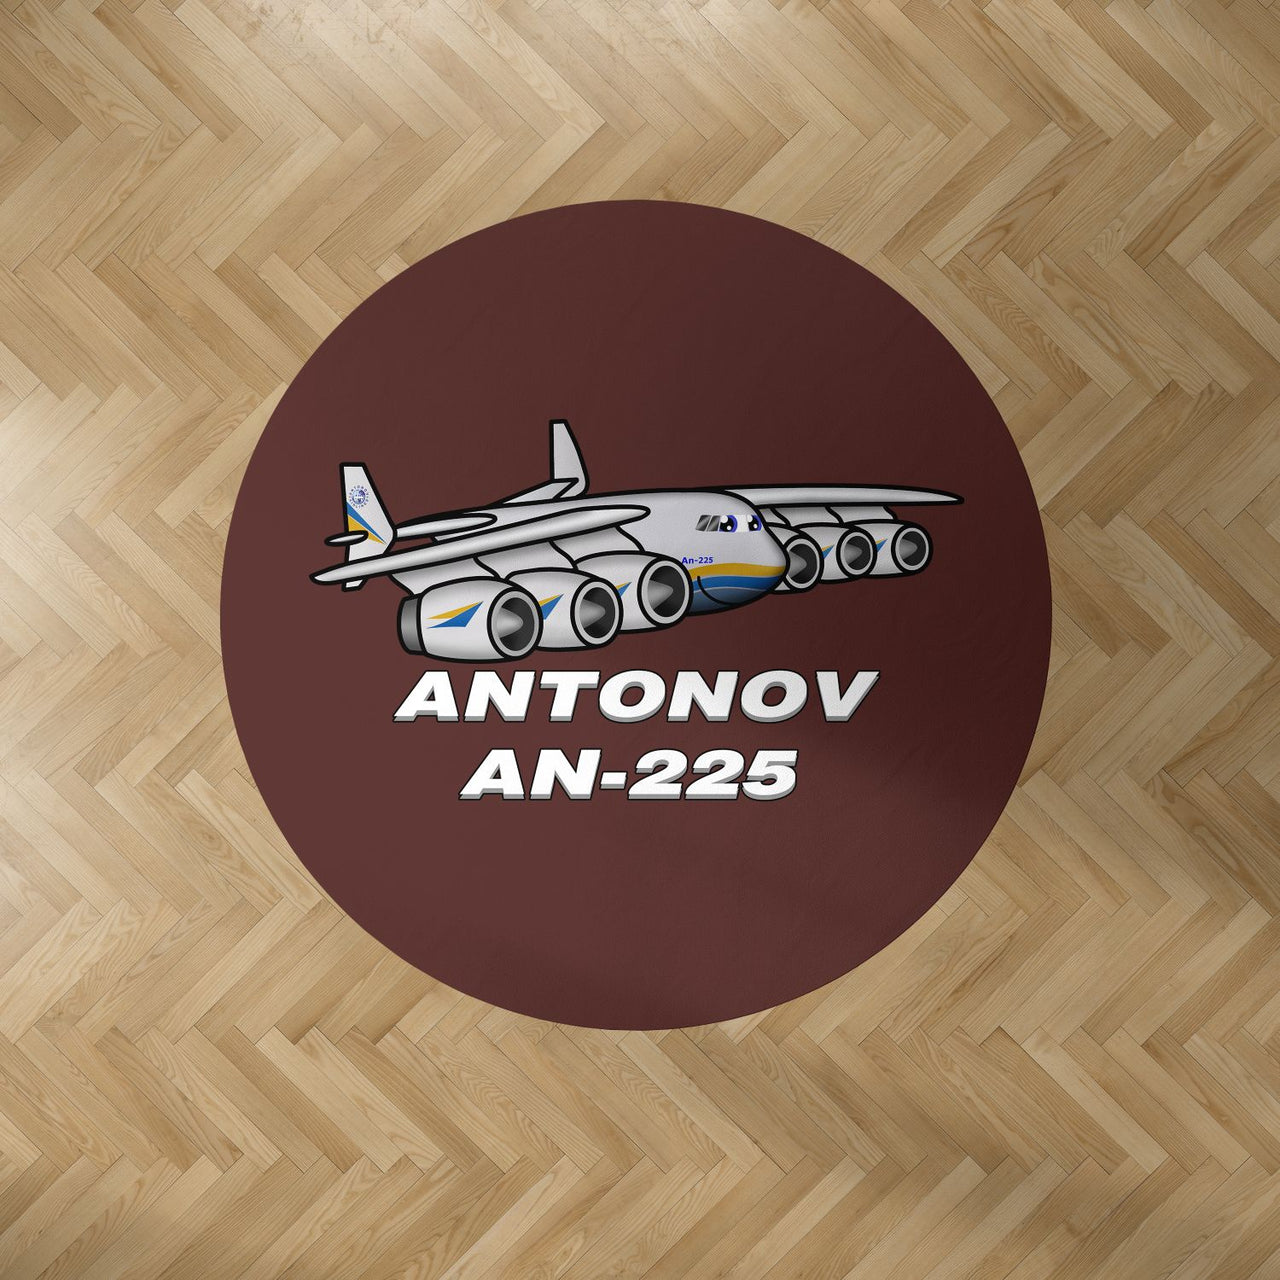 Antonov AN-225 (25) Designed Carpet & Floor Mats (Round)